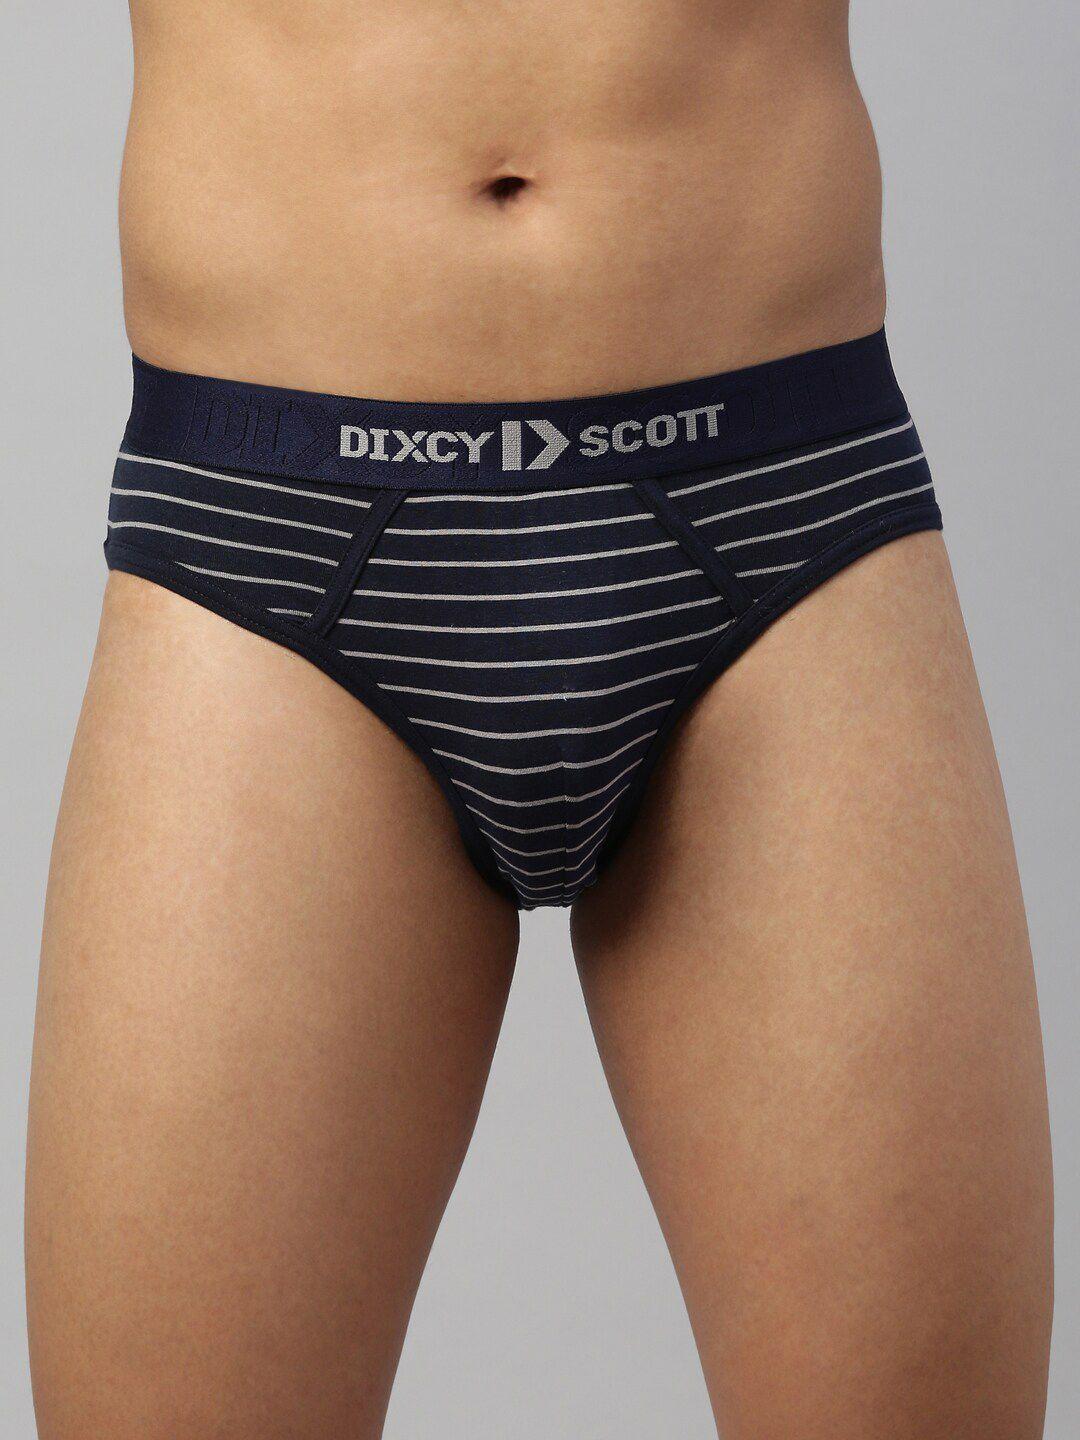 dixcy-scott-maximus-men-navy-blue-&-grey-striped-pure-cotton-basic-briefs